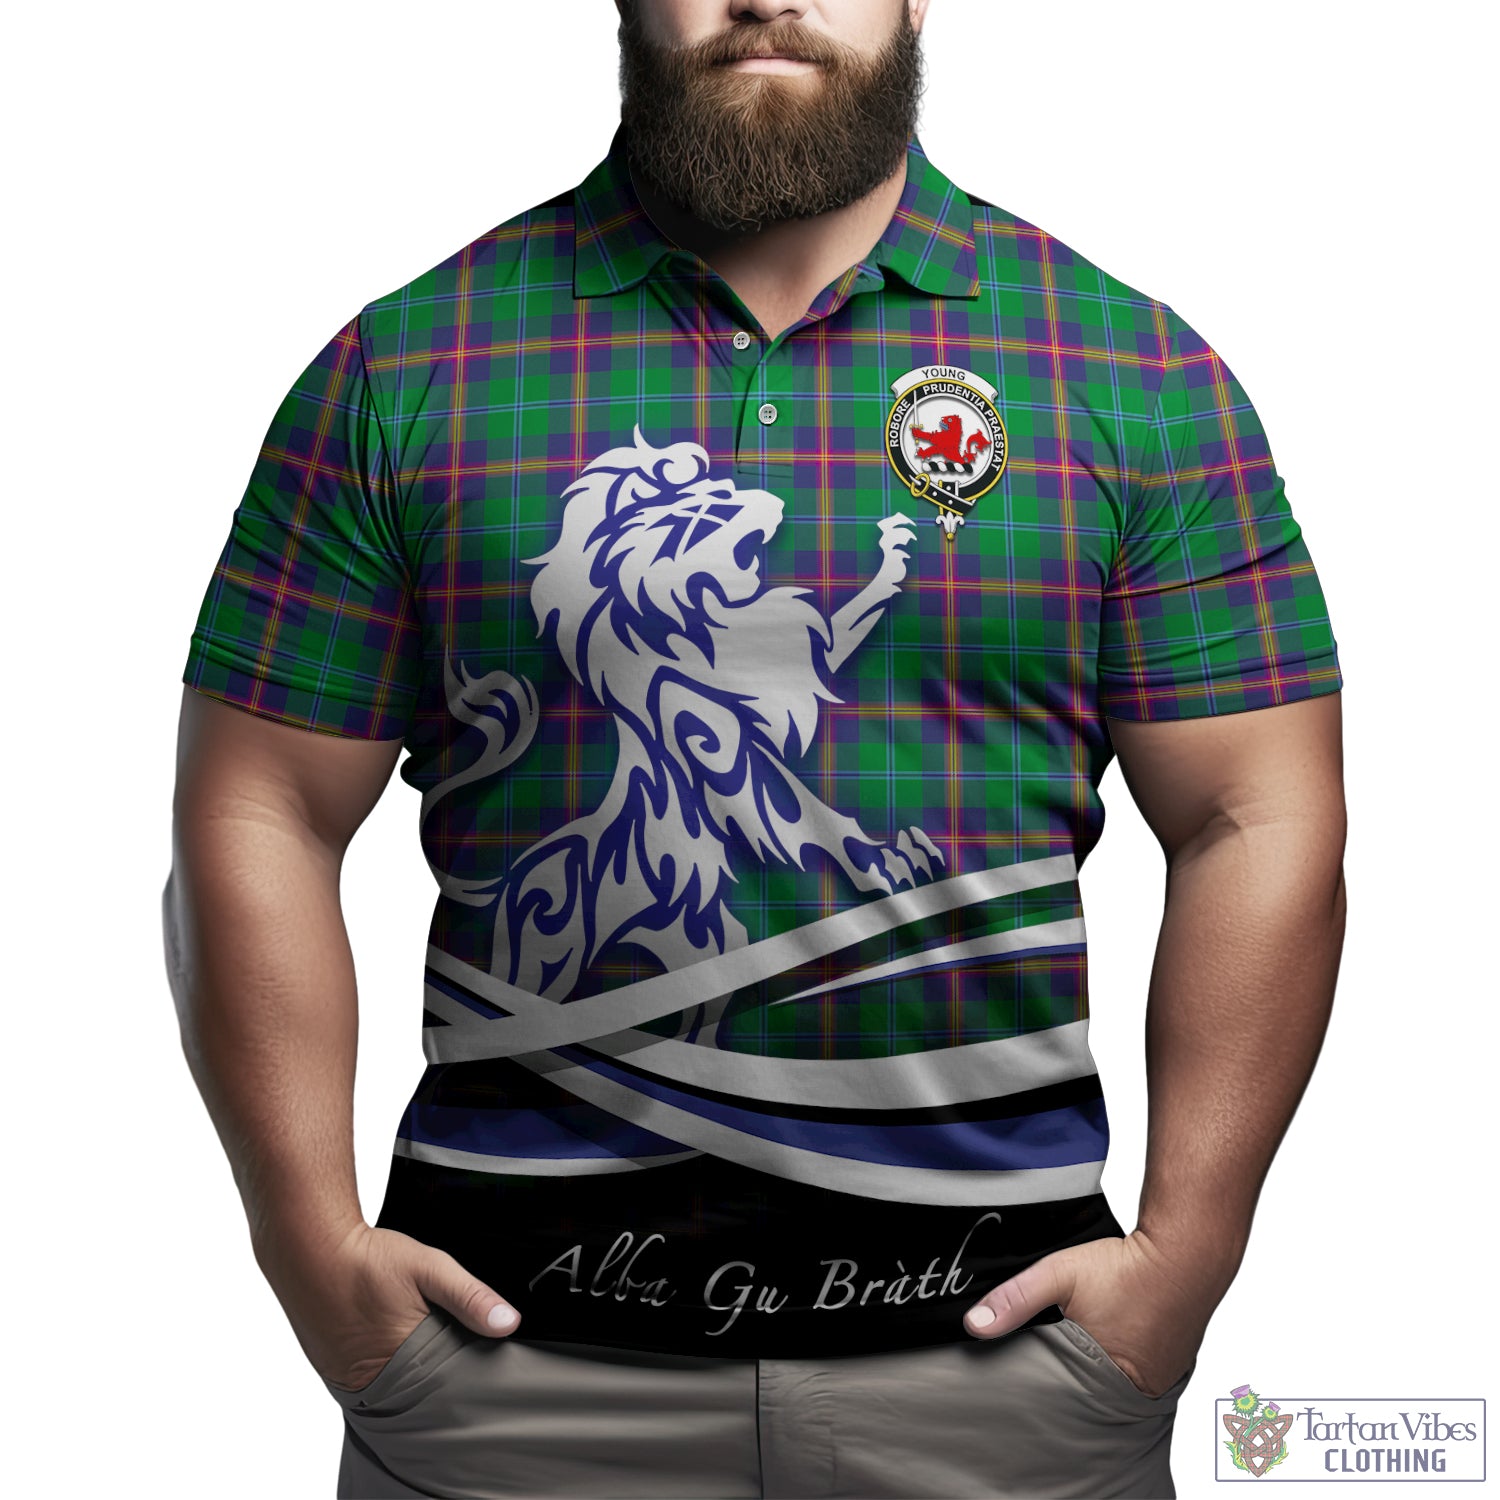 young-modern-tartan-polo-shirt-with-alba-gu-brath-regal-lion-emblem